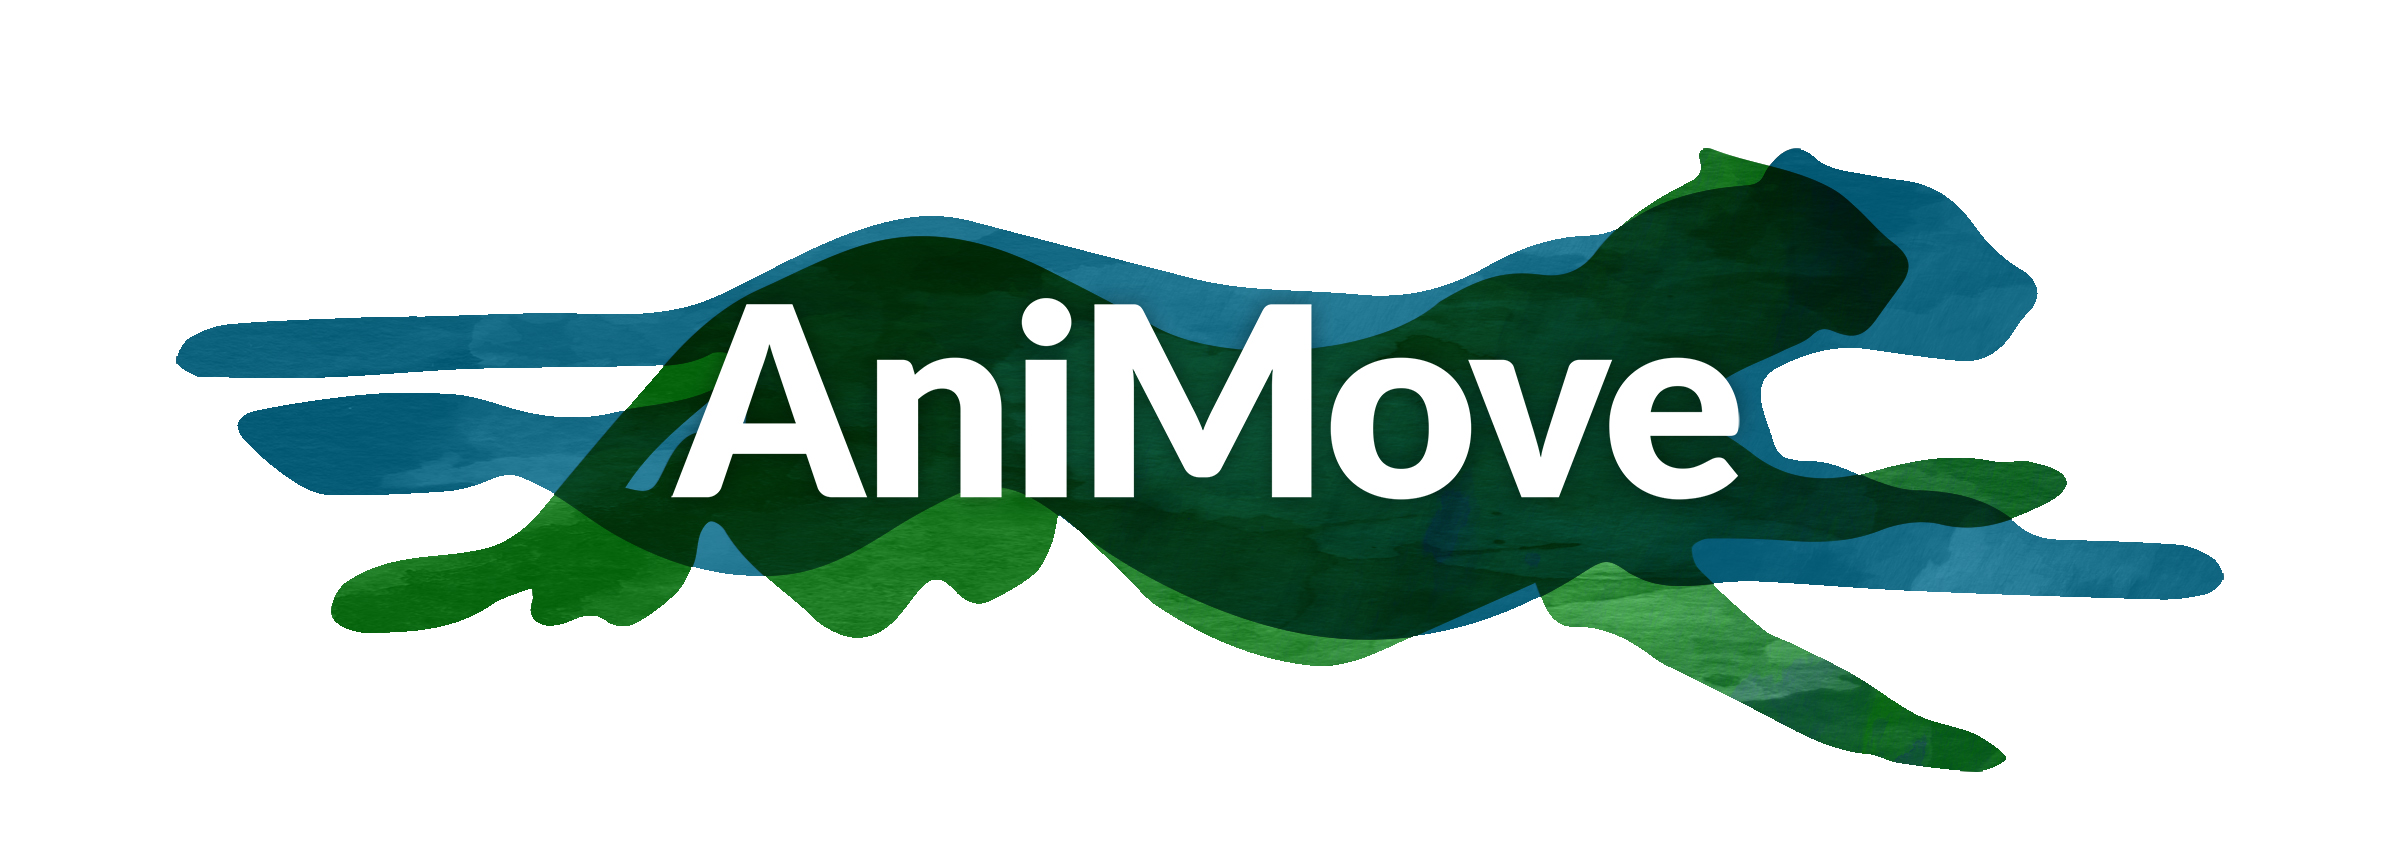 movement clipart animal movement